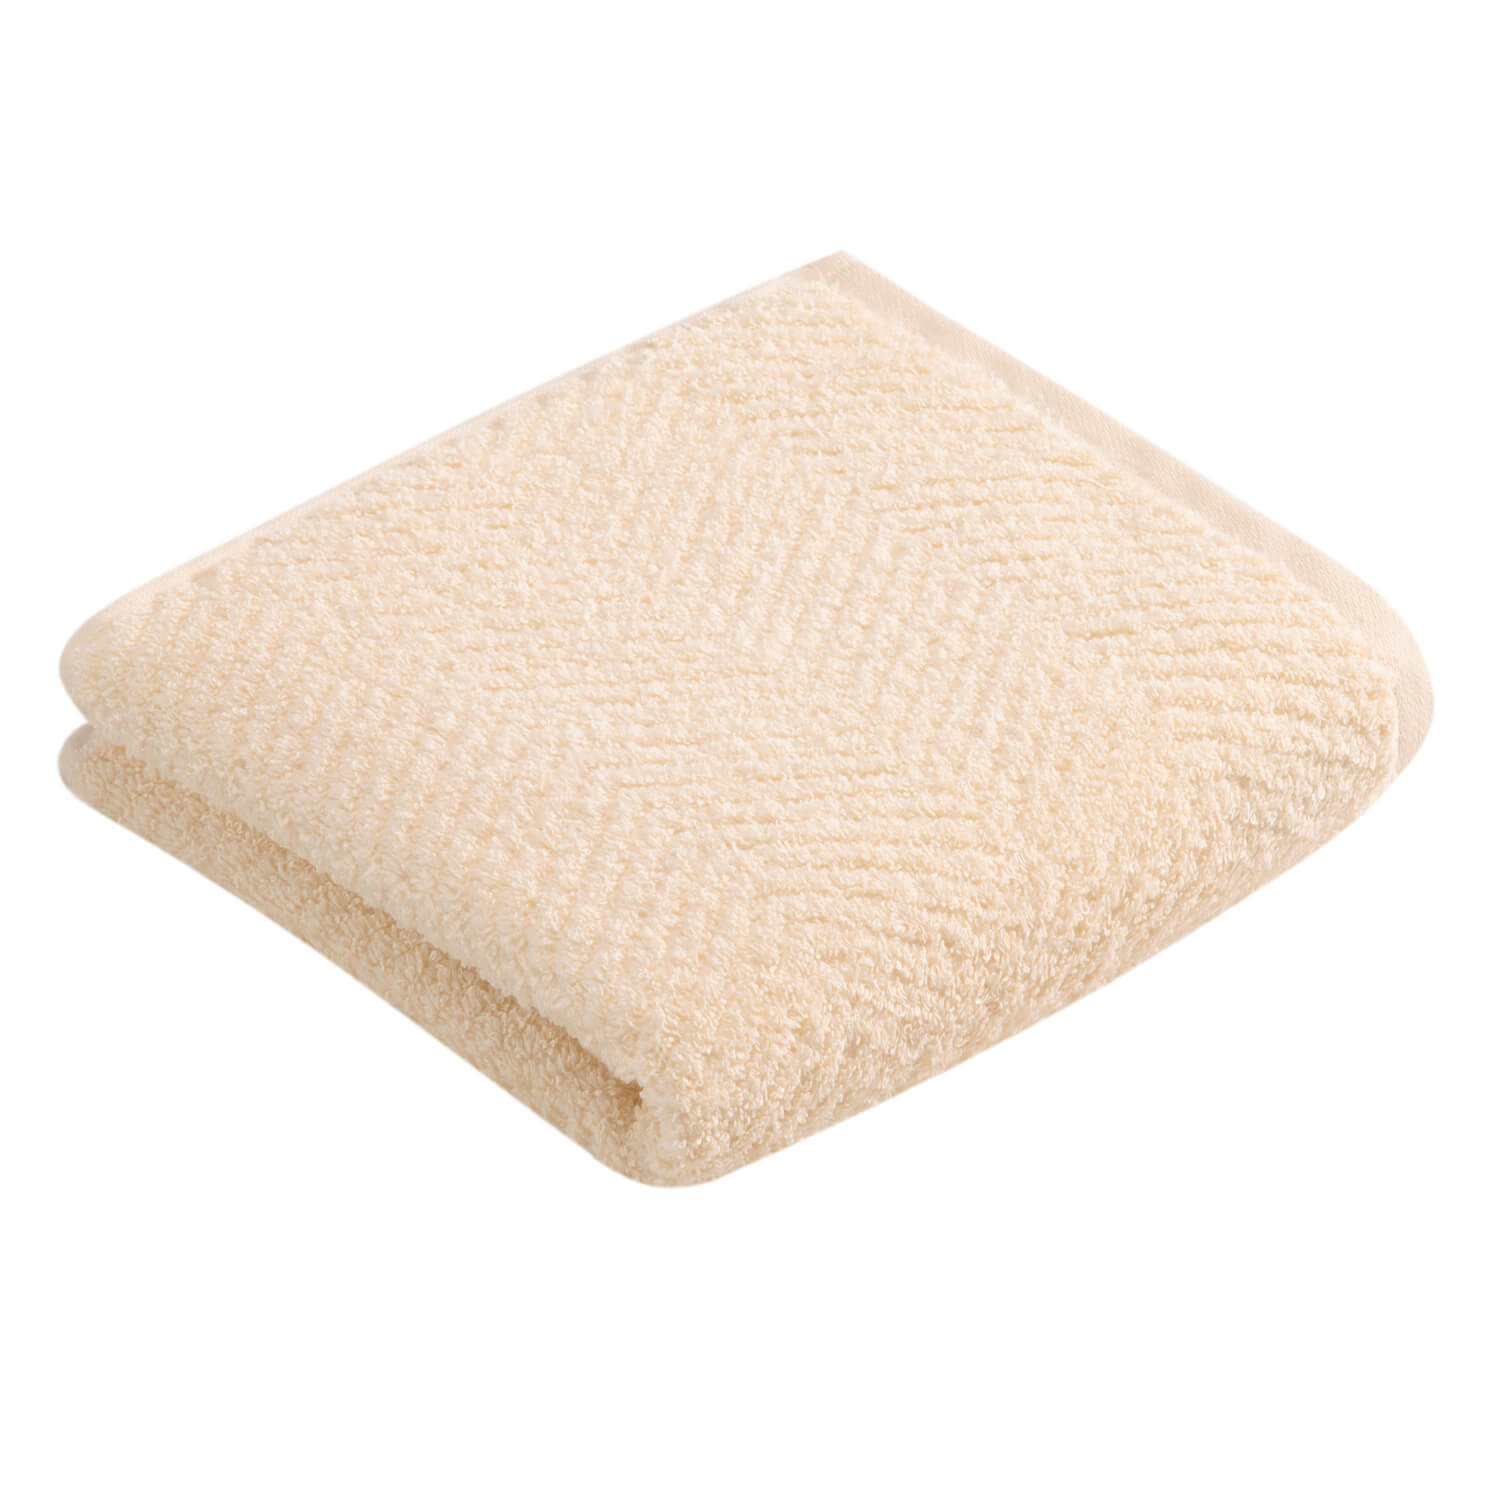 Vossen Dusk Towel - Camel 1 Shaws Department Stores